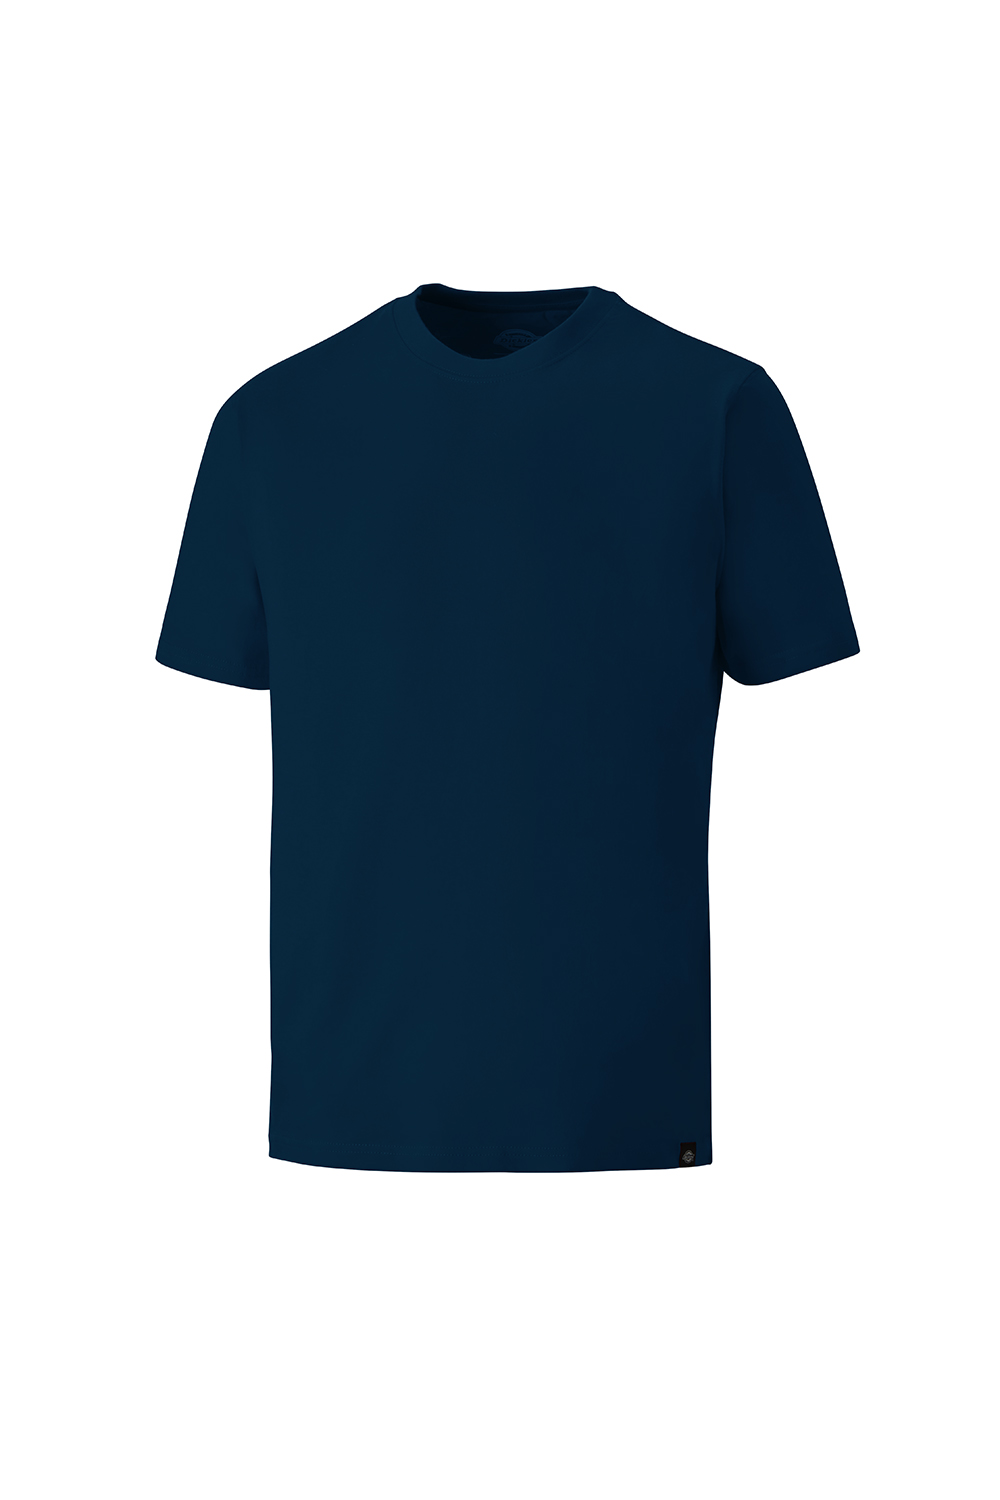 Dickies Unisex T-Shirt, Marineblau